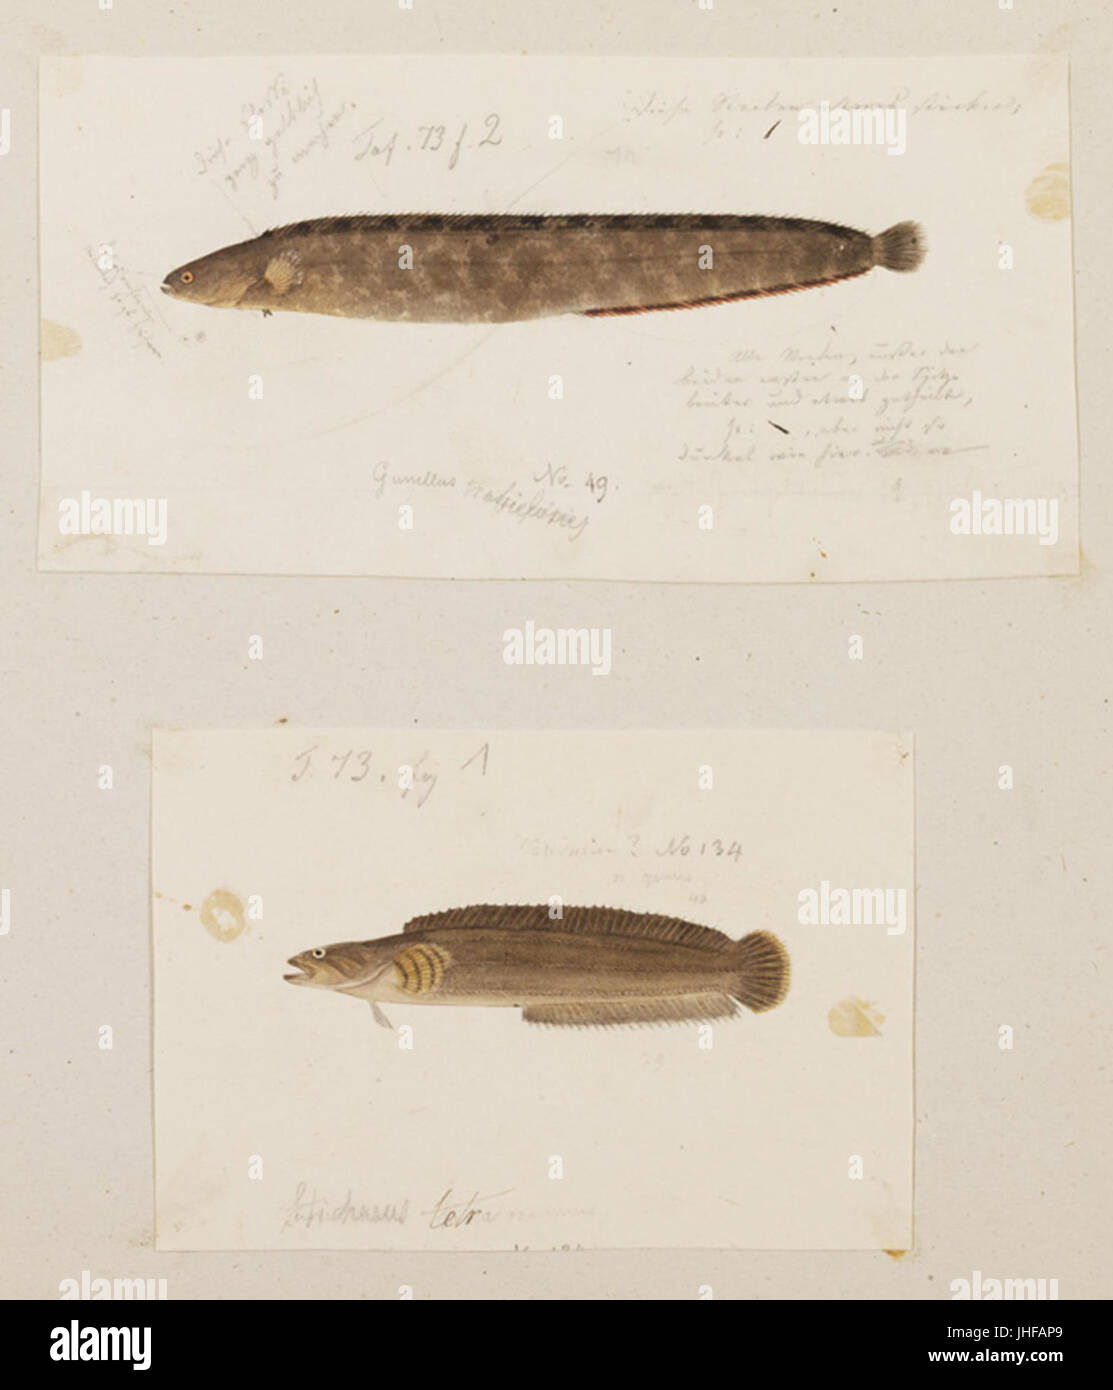 Naturalis Biodiversity Center - RMNH.ART.204 - Tridentiger obscurus - Periophthalmus cantonensis - Kawahara Keiga - 1823 - 1829 - Siebold Collection - pencil drawing - water colour Stock Photo